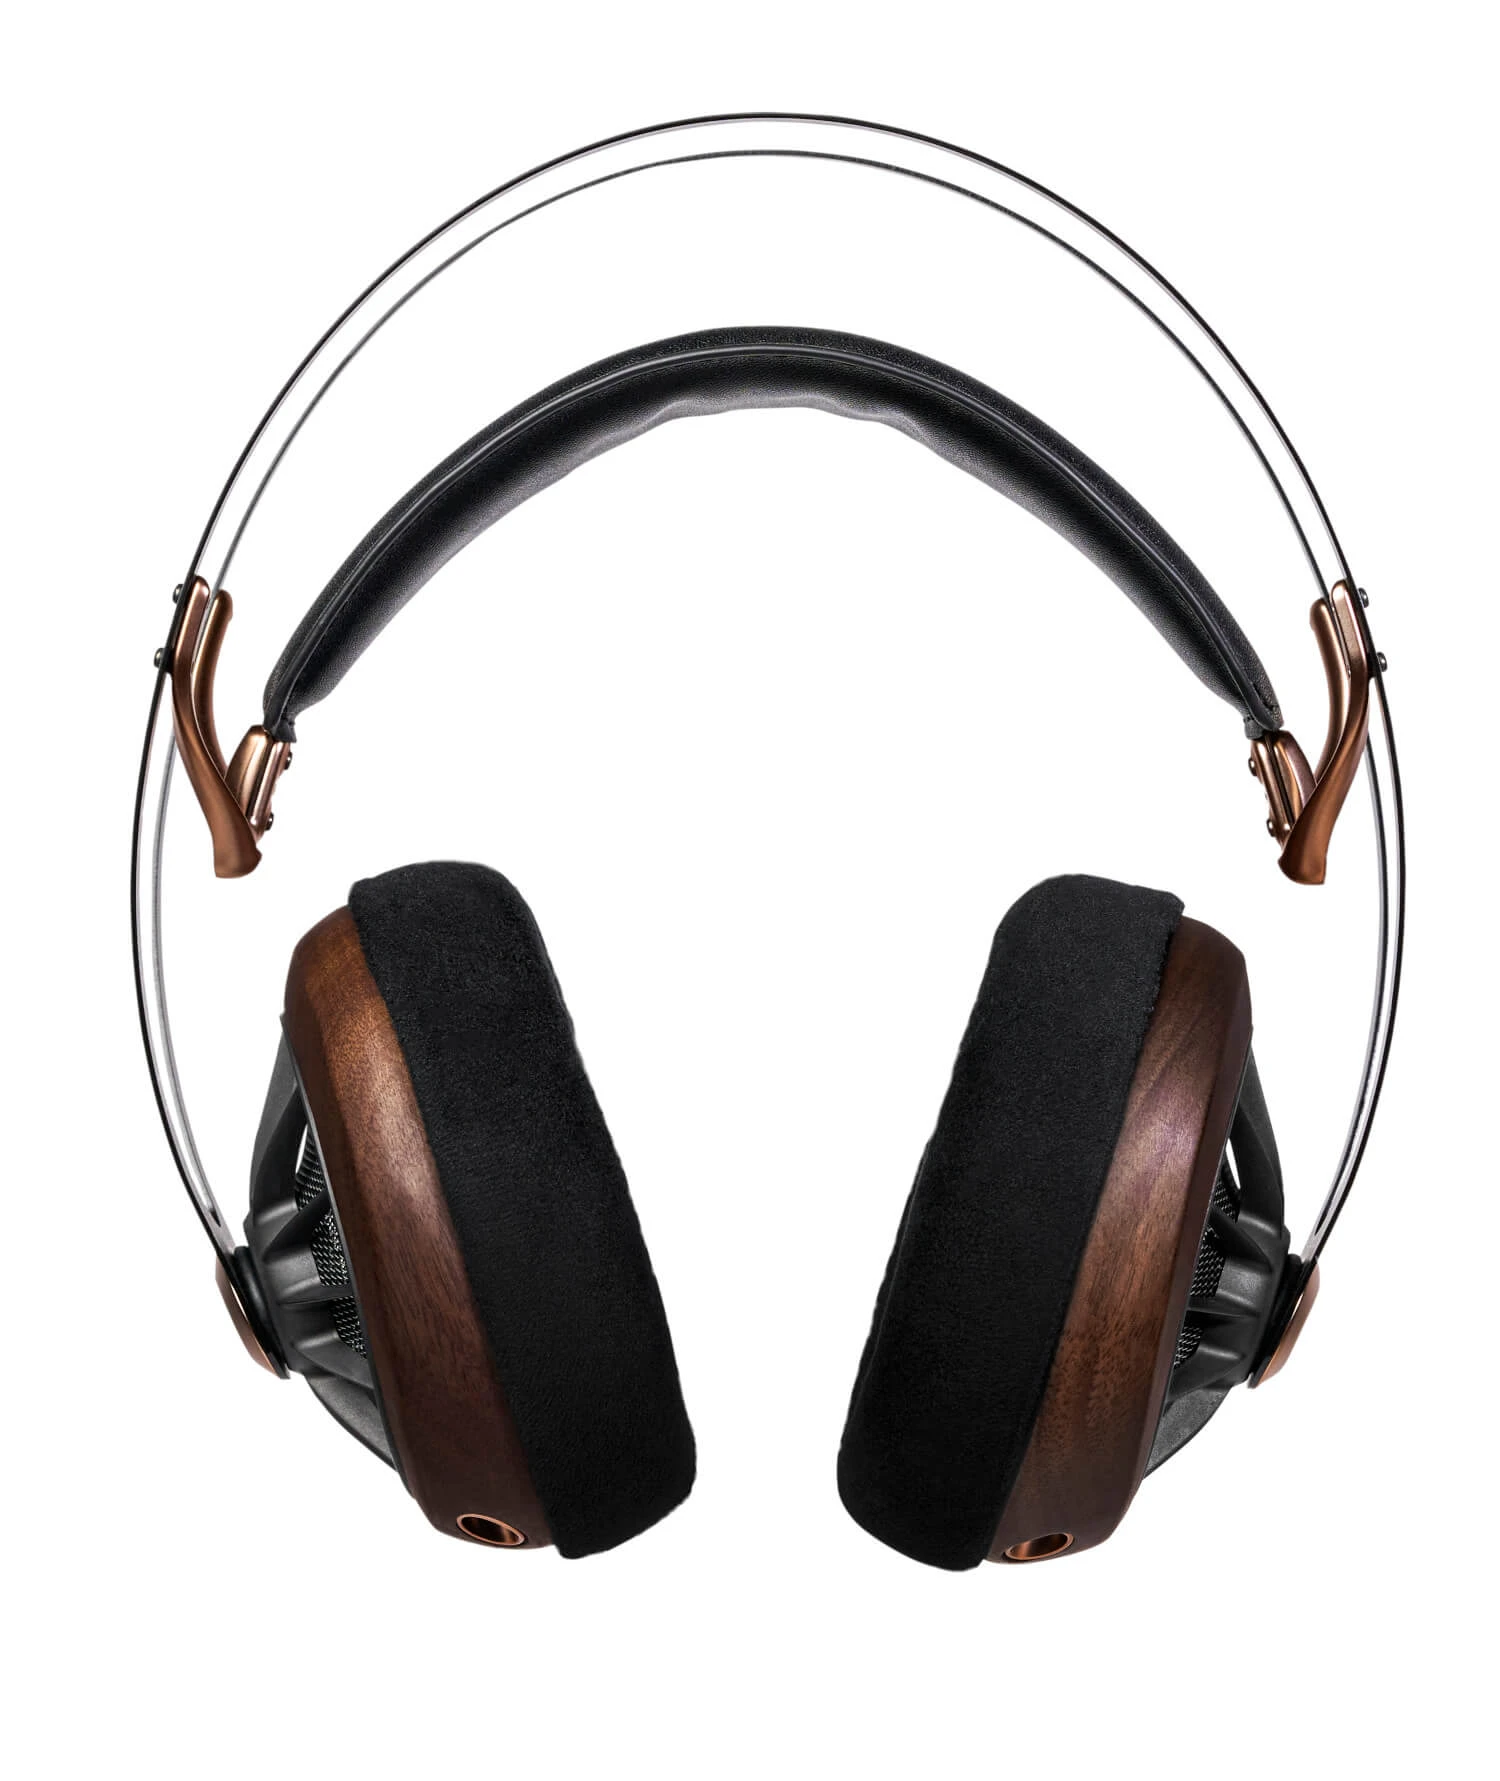 Meze Audio 109 Pro Performance, offener dynamischer Over-Ear Kopfhörer